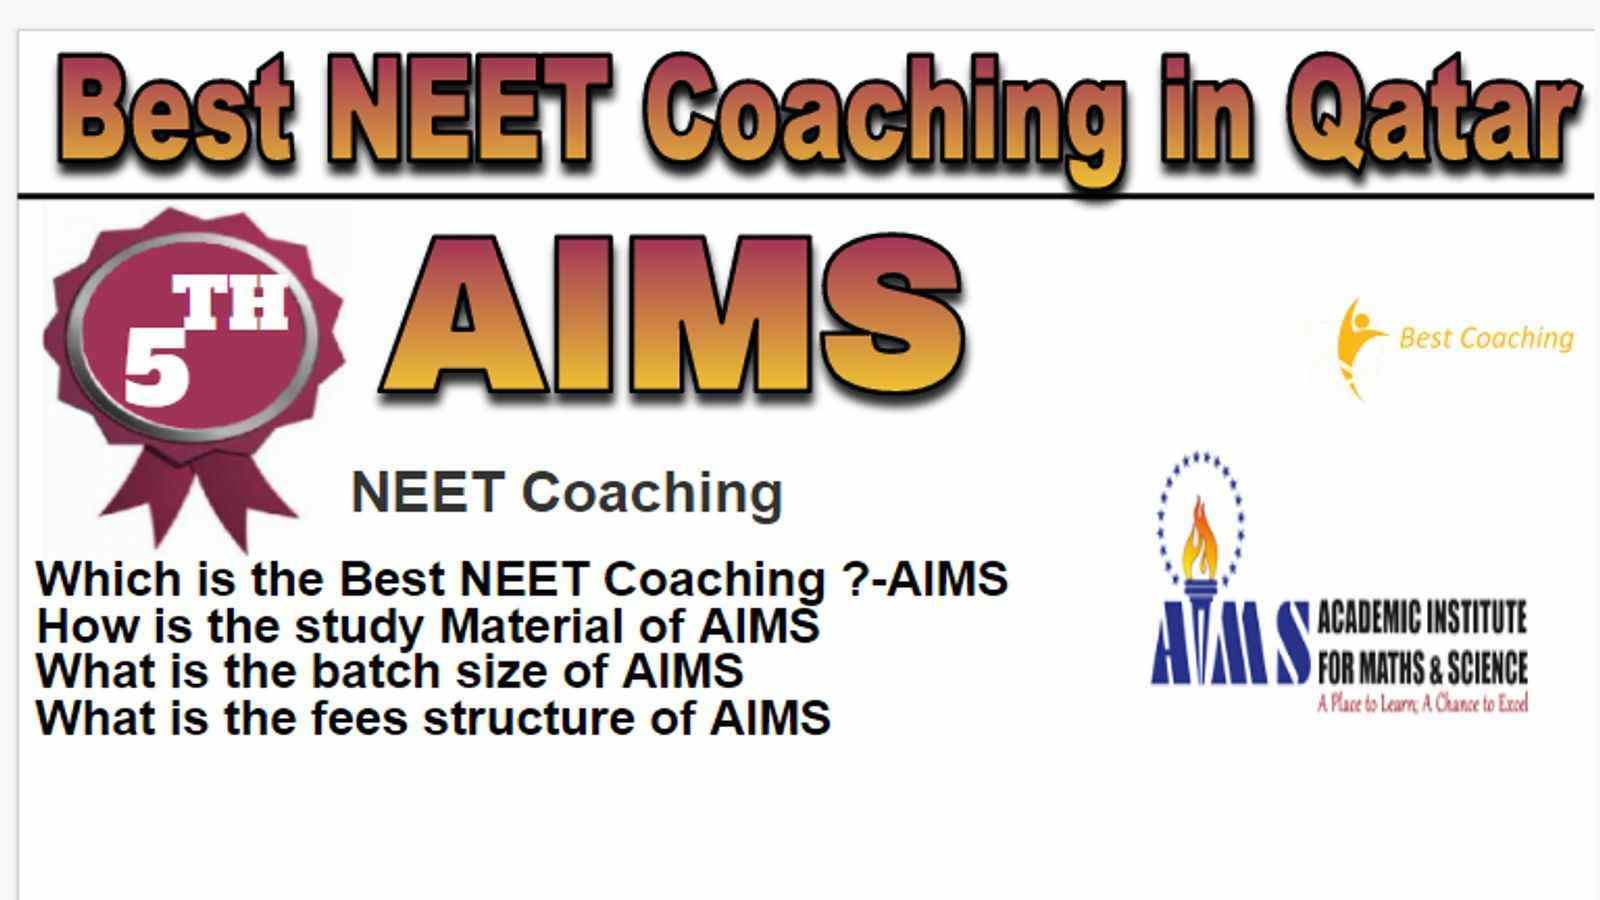 Rank 5 Best NEET Coaching in Qatar